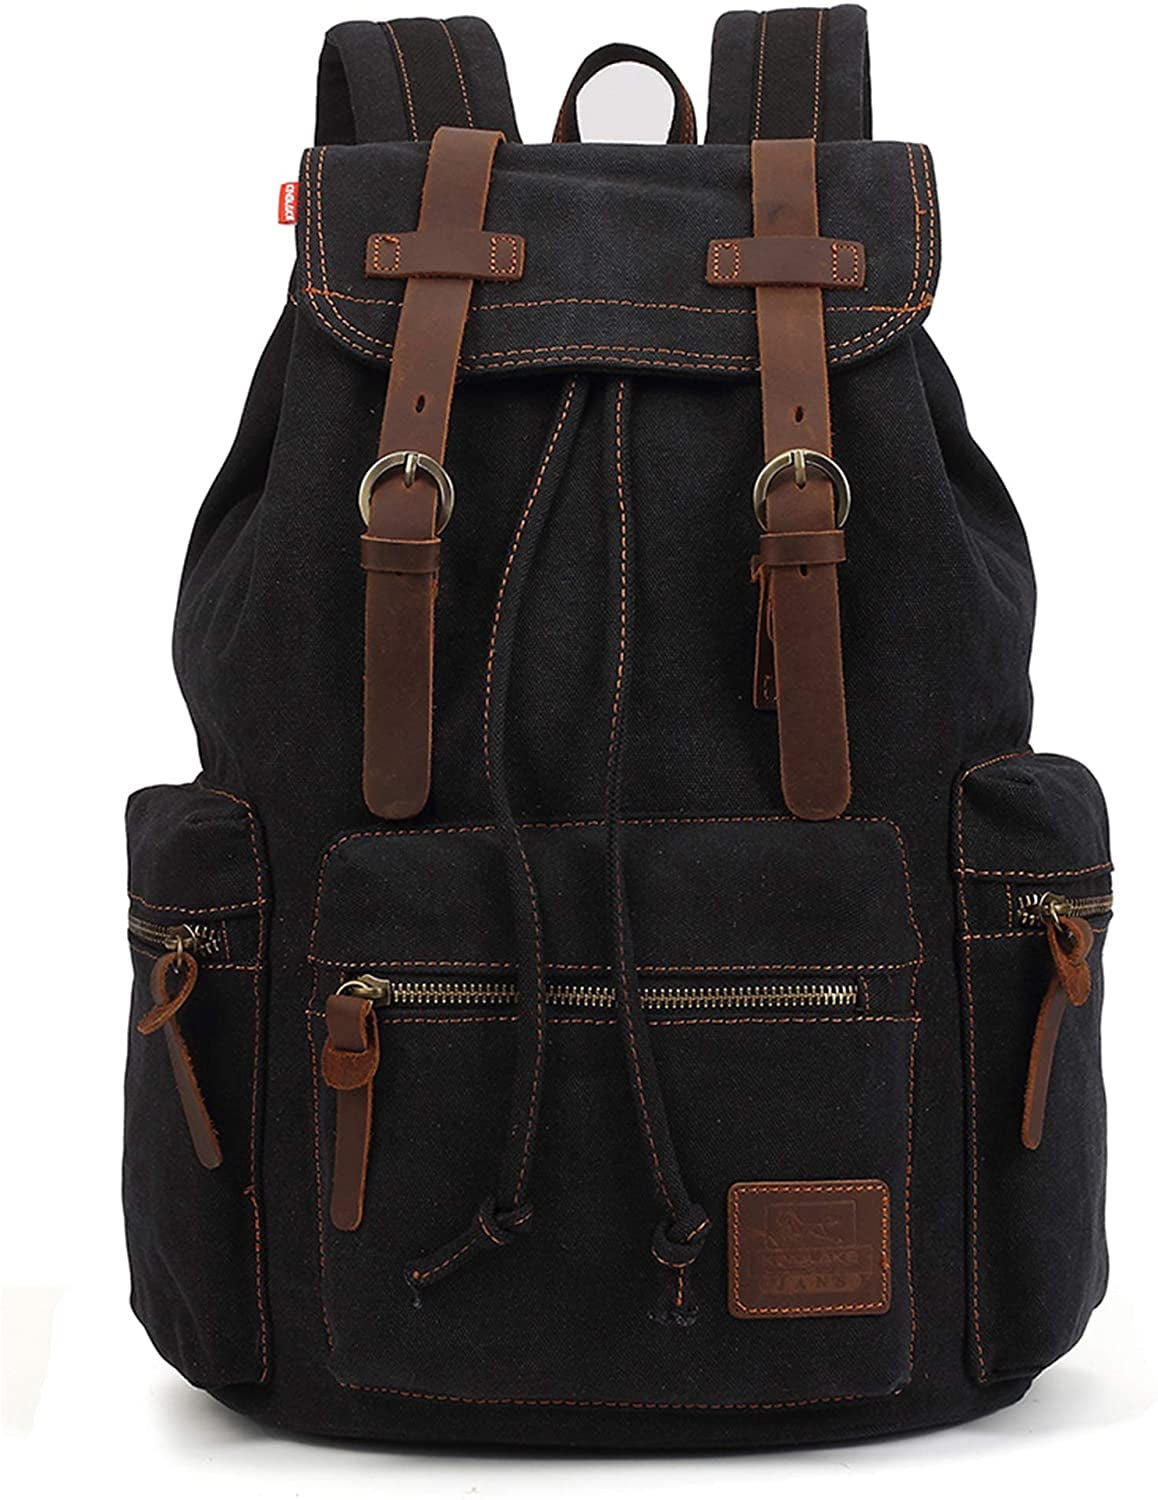 KAUKKO Canvas Vintage Backpack Casual Daypack School Leather Rucksack ...